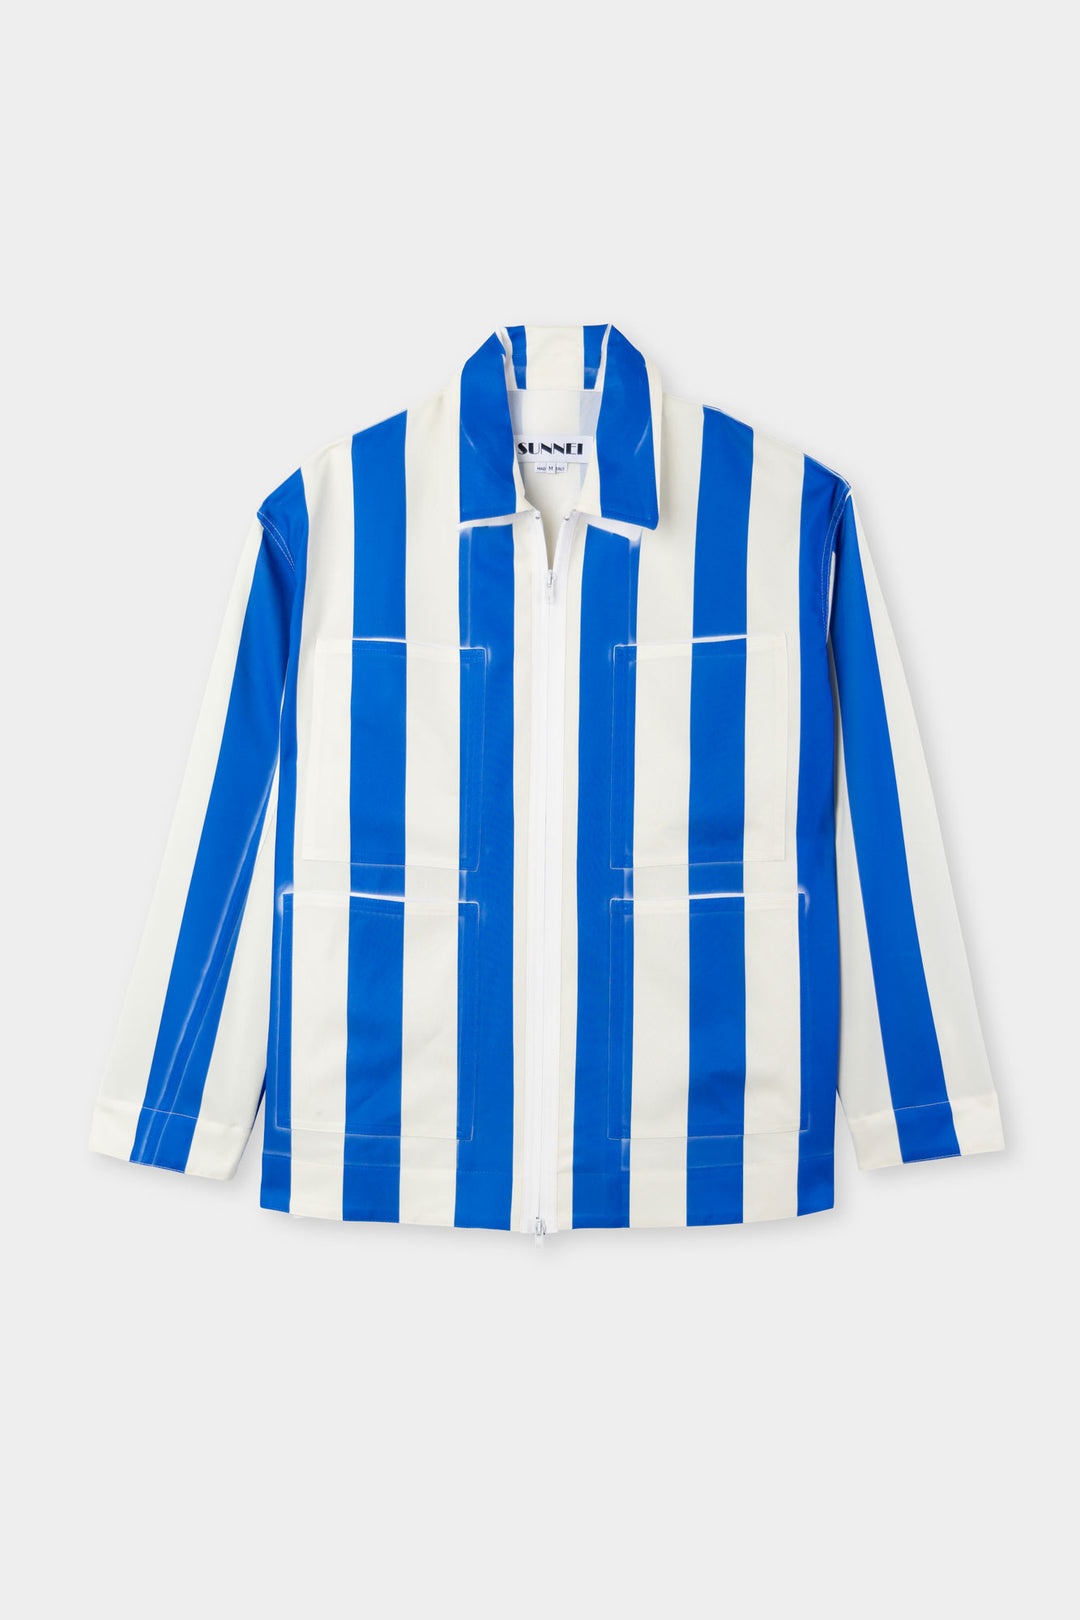 CARGO SHIRT / blue & beige stripes - 3